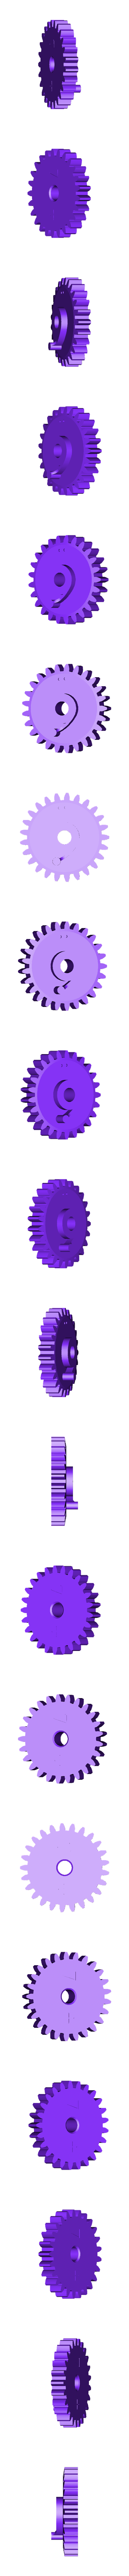 Gear7A.stl Download STL file 7-Segments • 3D printing design, fhuable